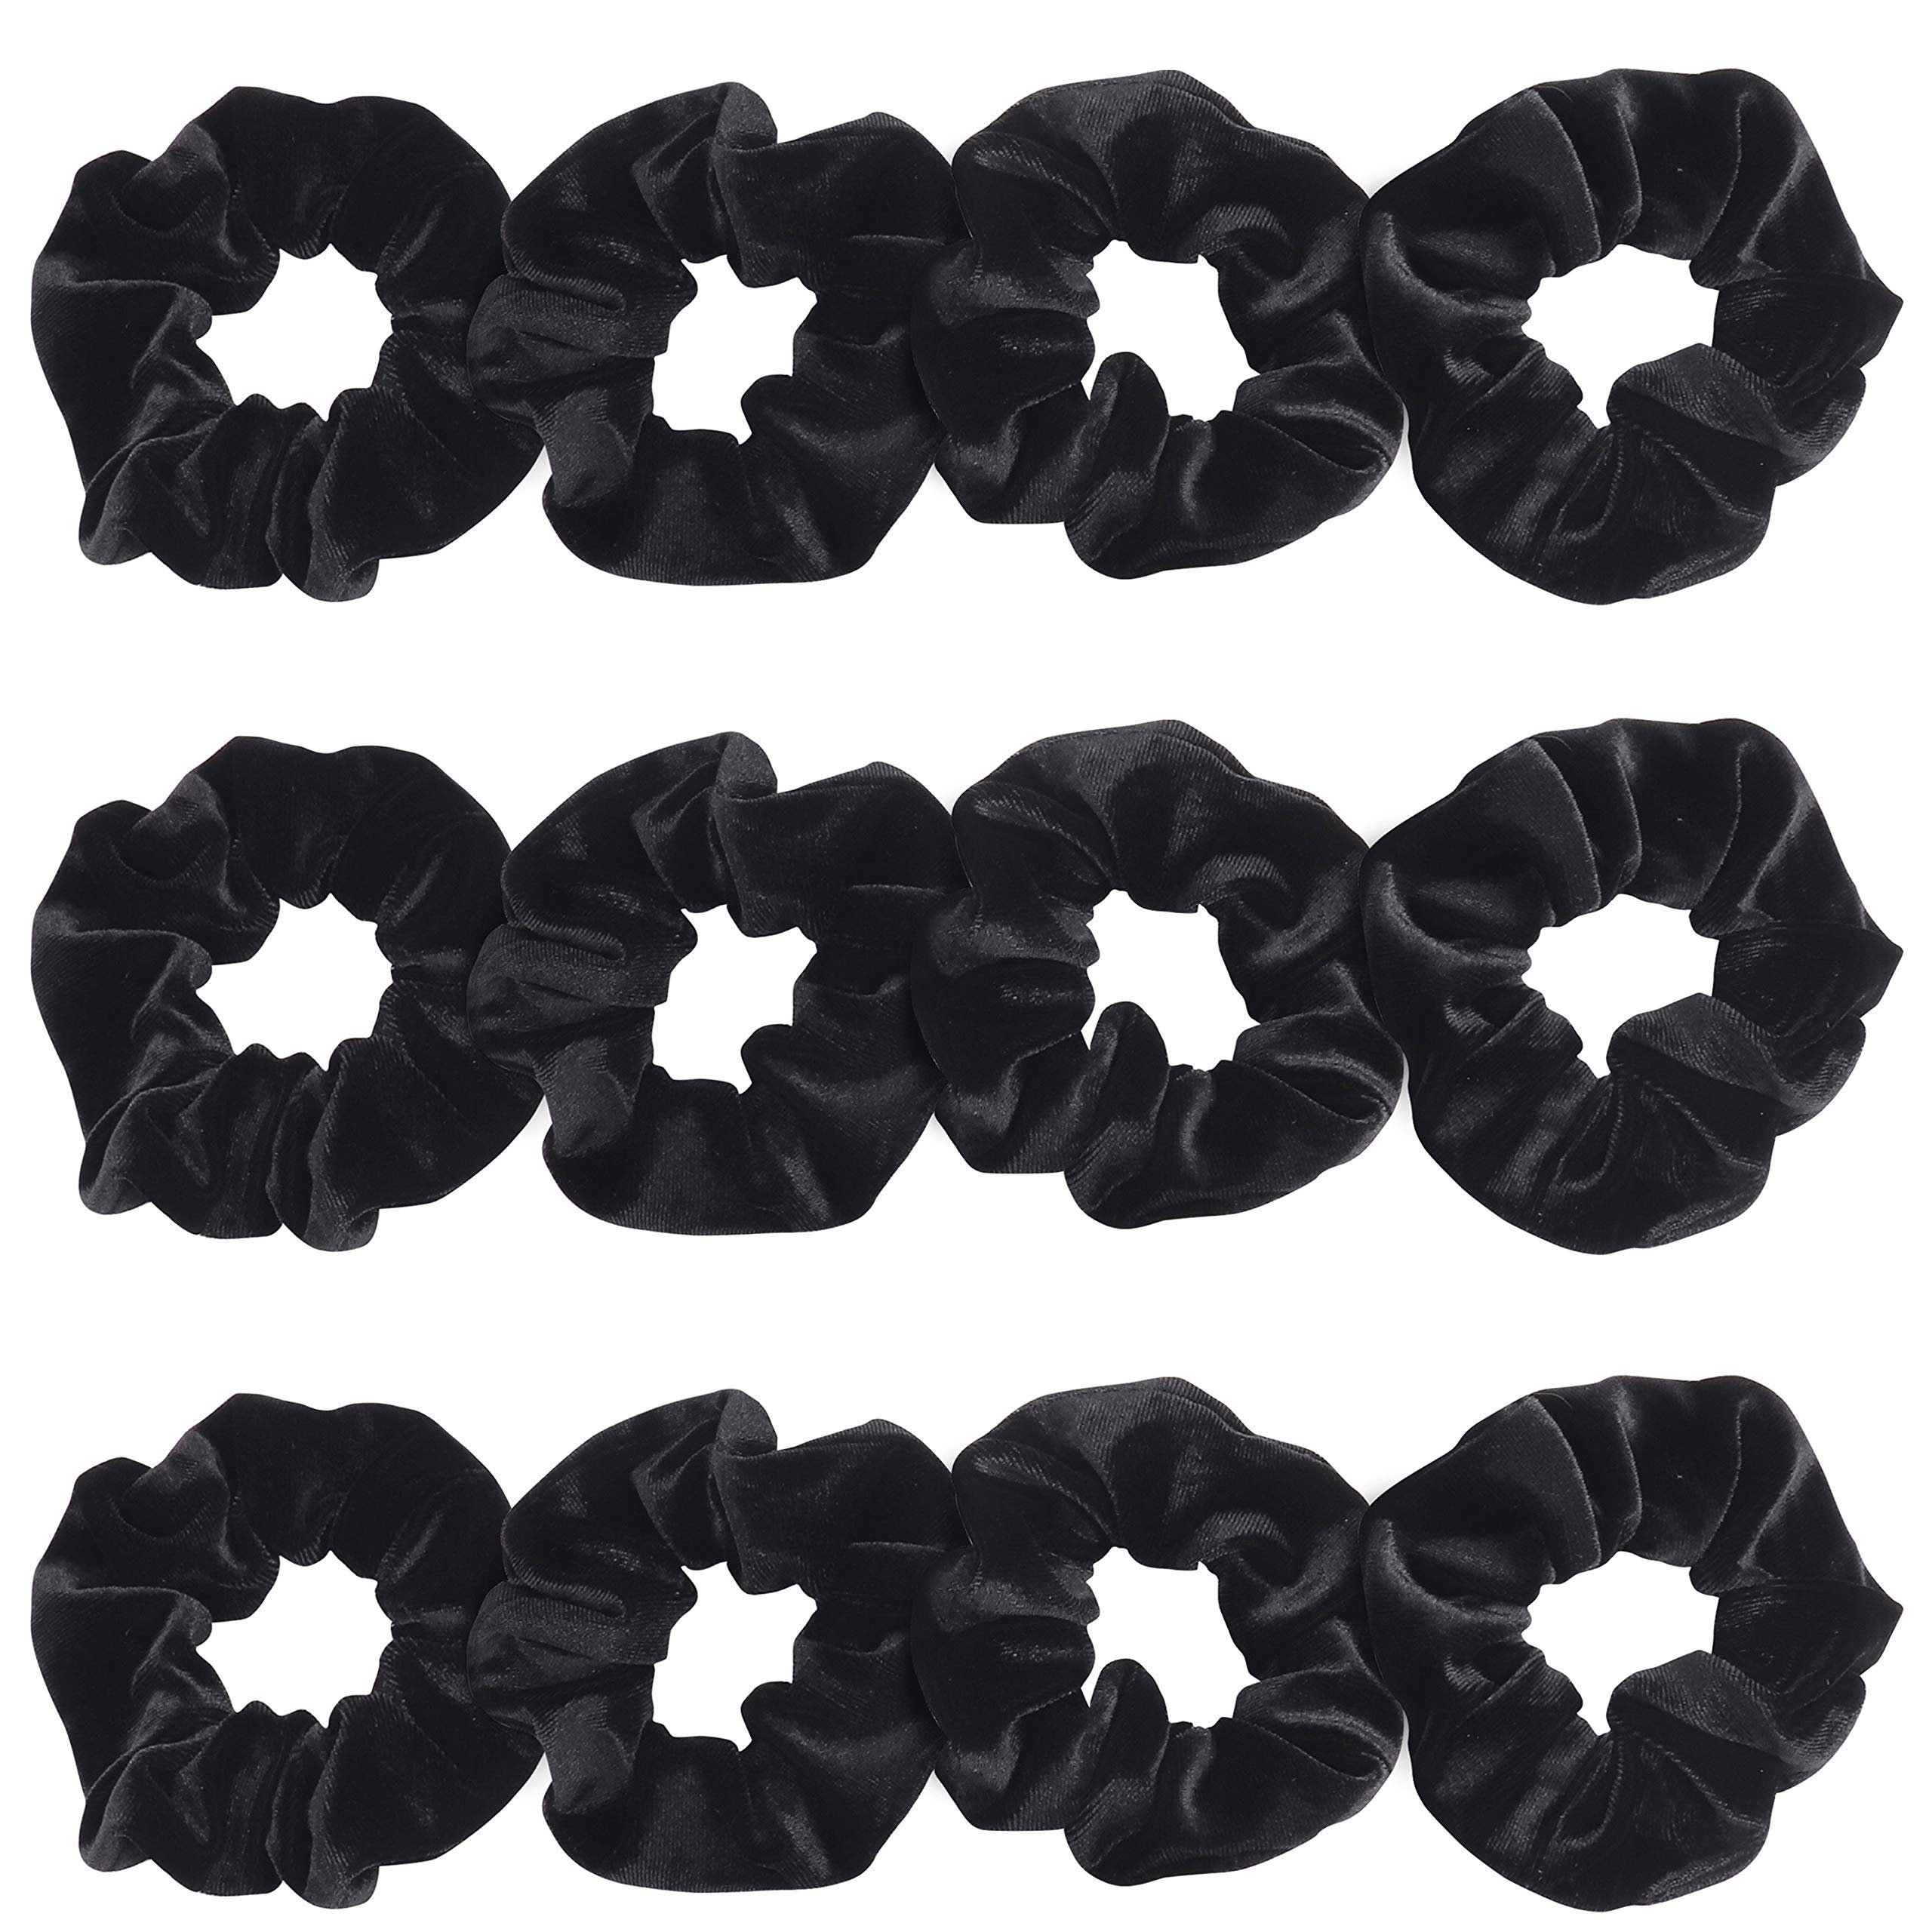 Belle Vous Haarband Schwarze Samt Haarbänder (12er-Pack) für Damen, 1-tlg., Black Velvet Hairbands (12-Pack) for Women